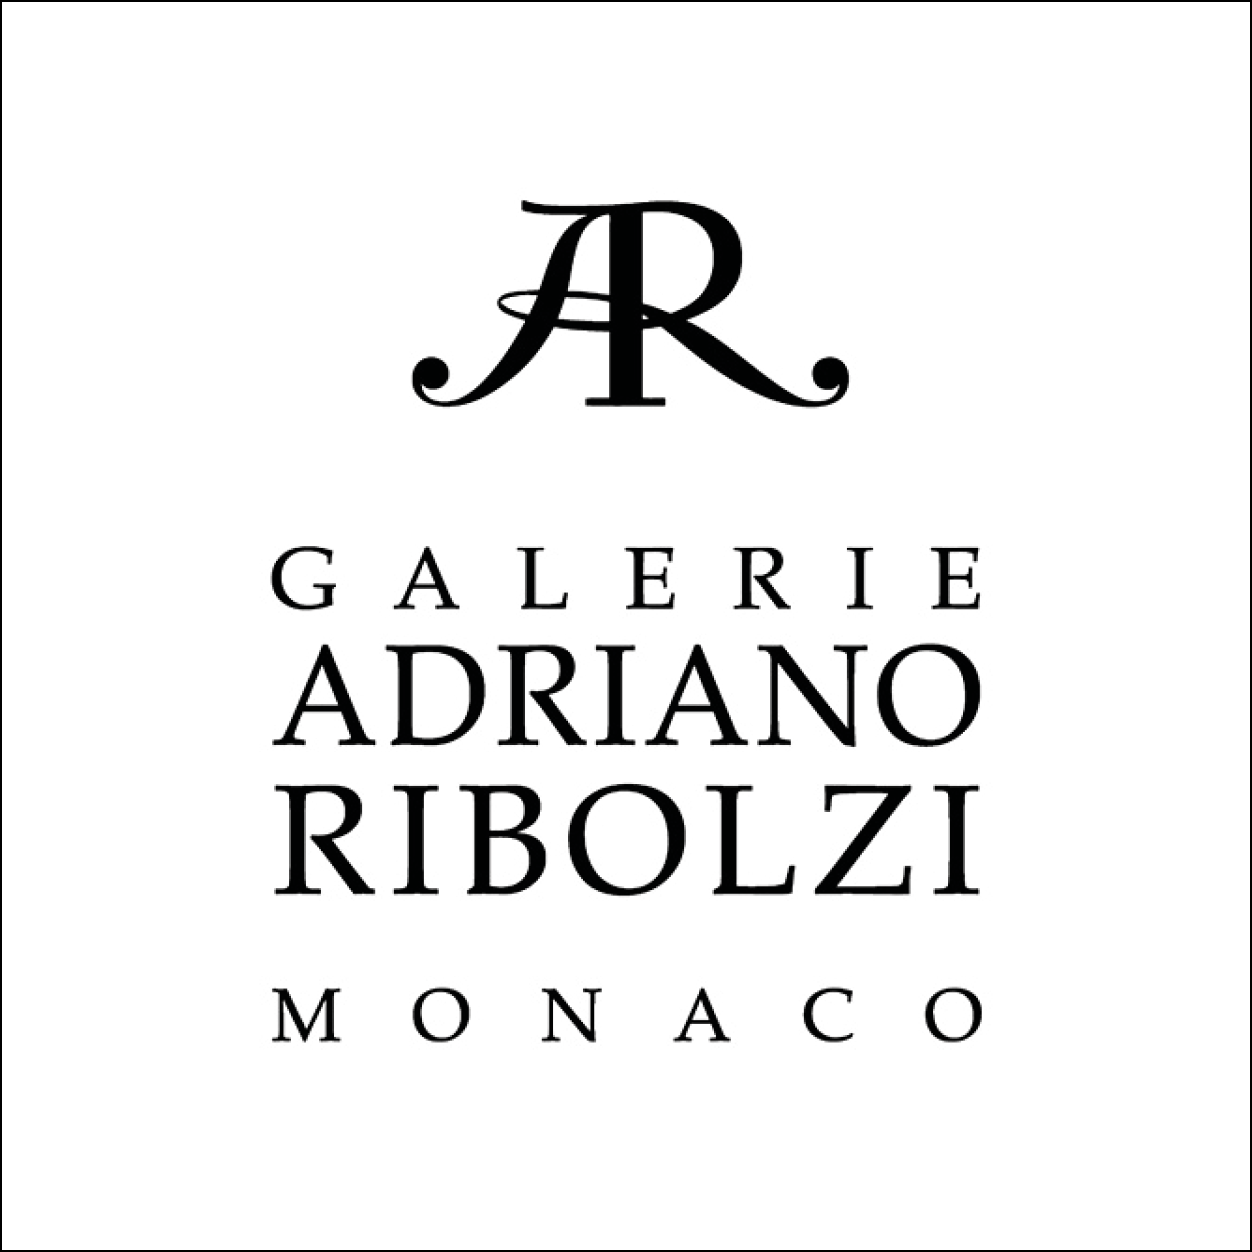 Galerie Adriano Ribolzi